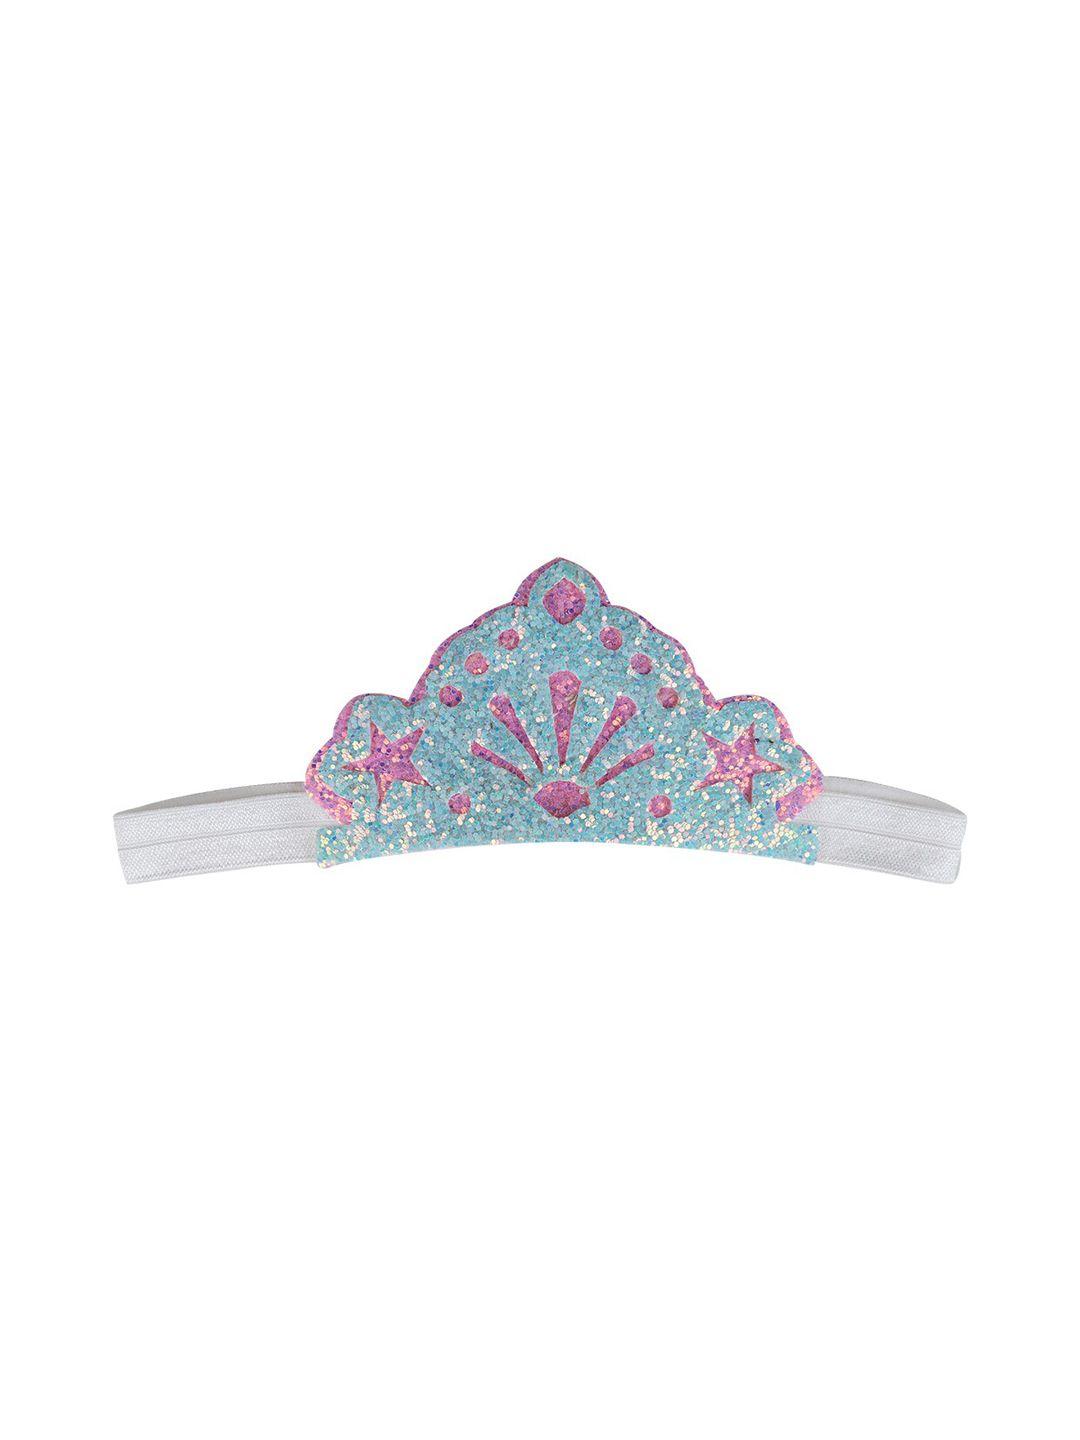 aye candy girls teal-green & pink mermaid crown chill wrap headband